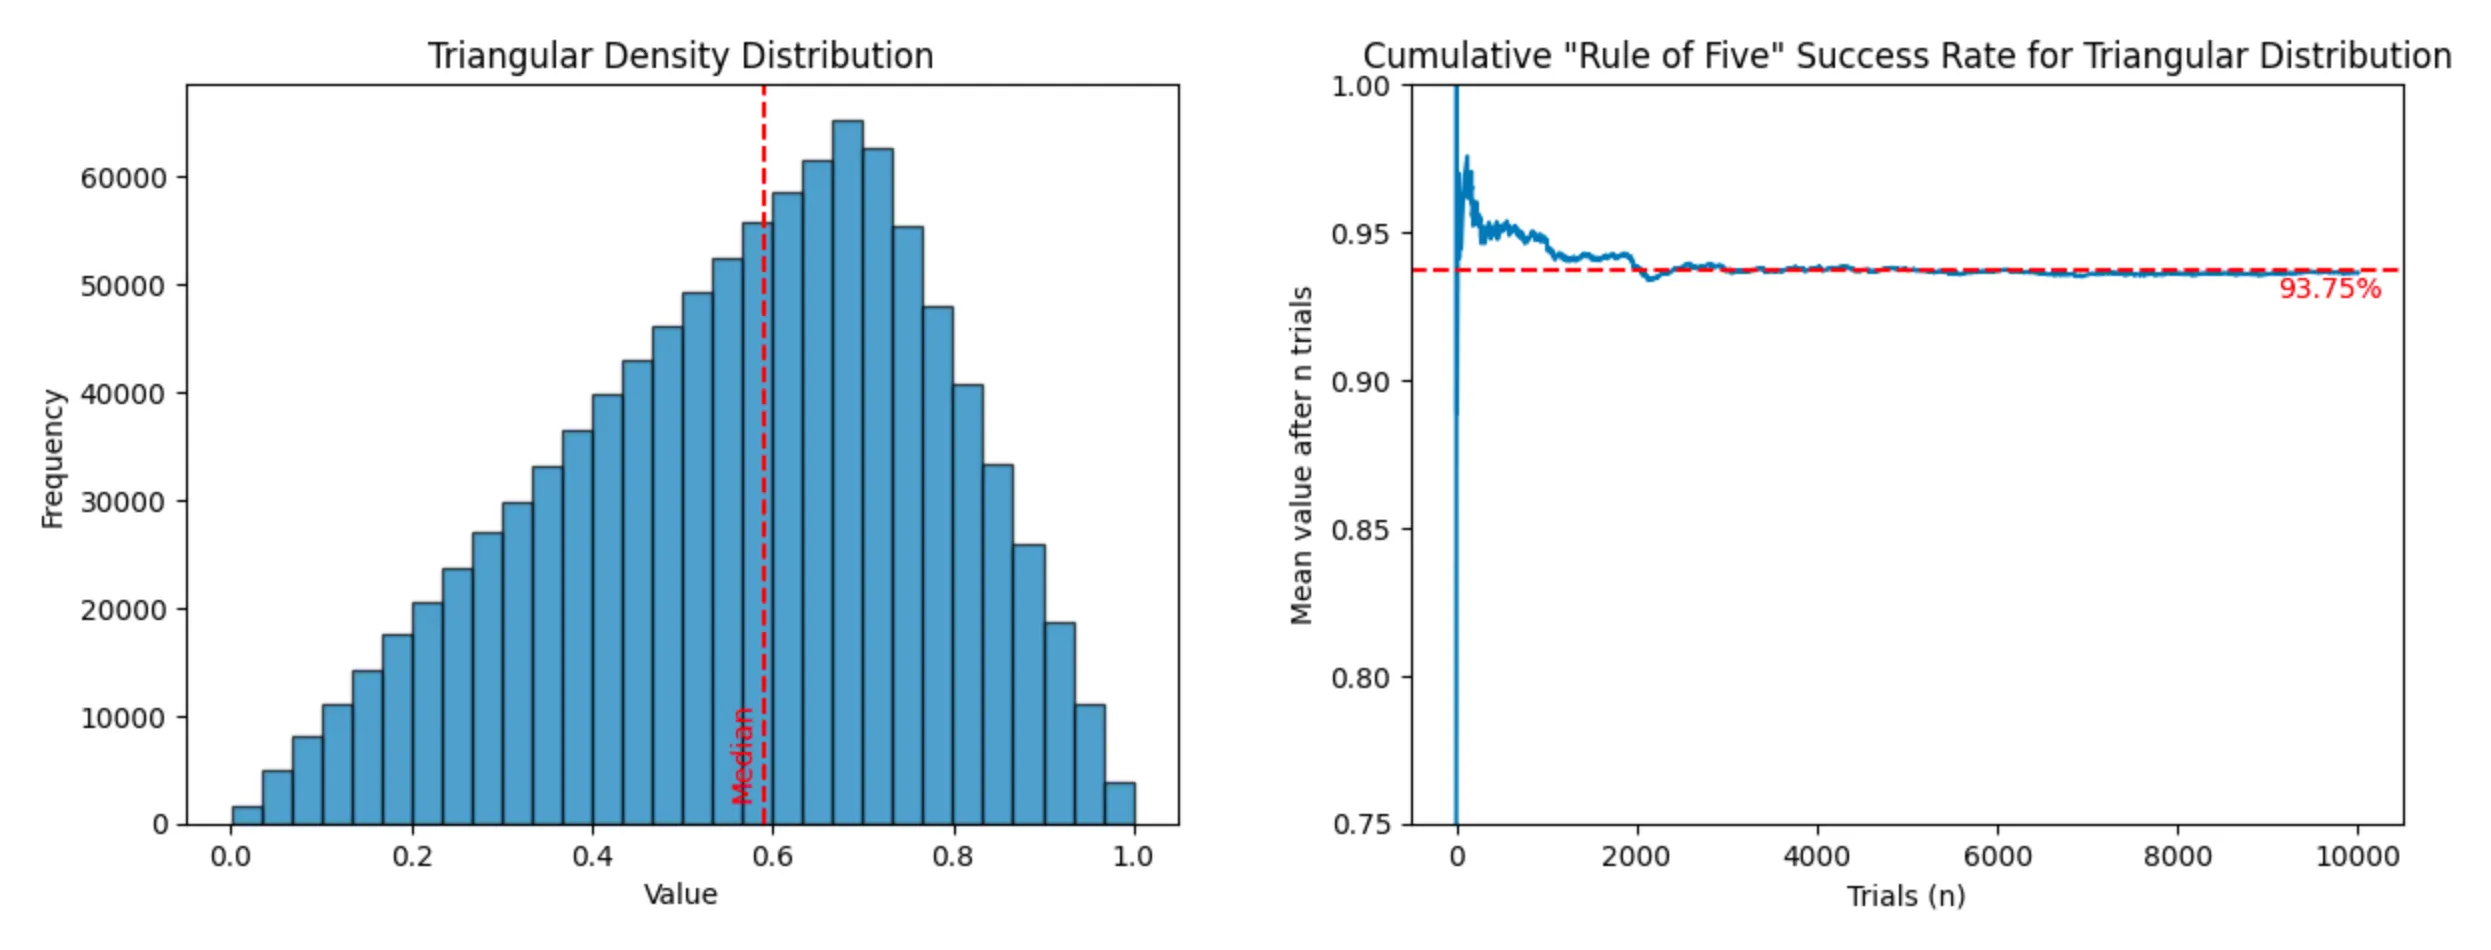 Triangular density distribution and cumulative success rate